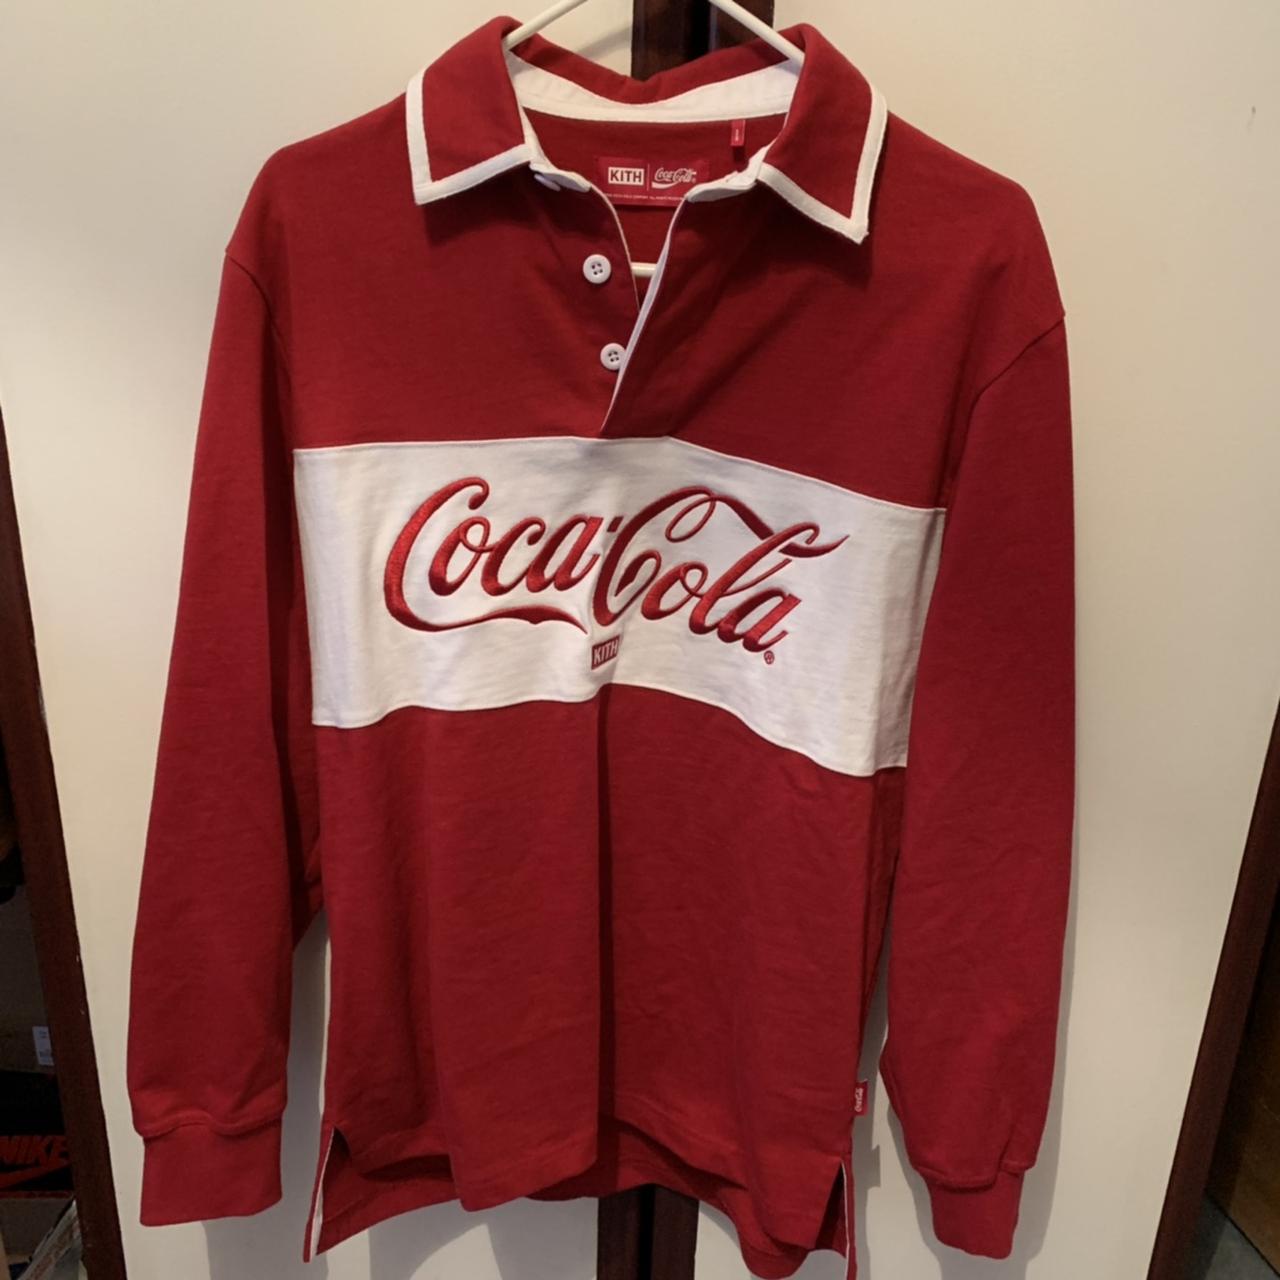 Kith x Coca Cola Coke Rugby Polo.